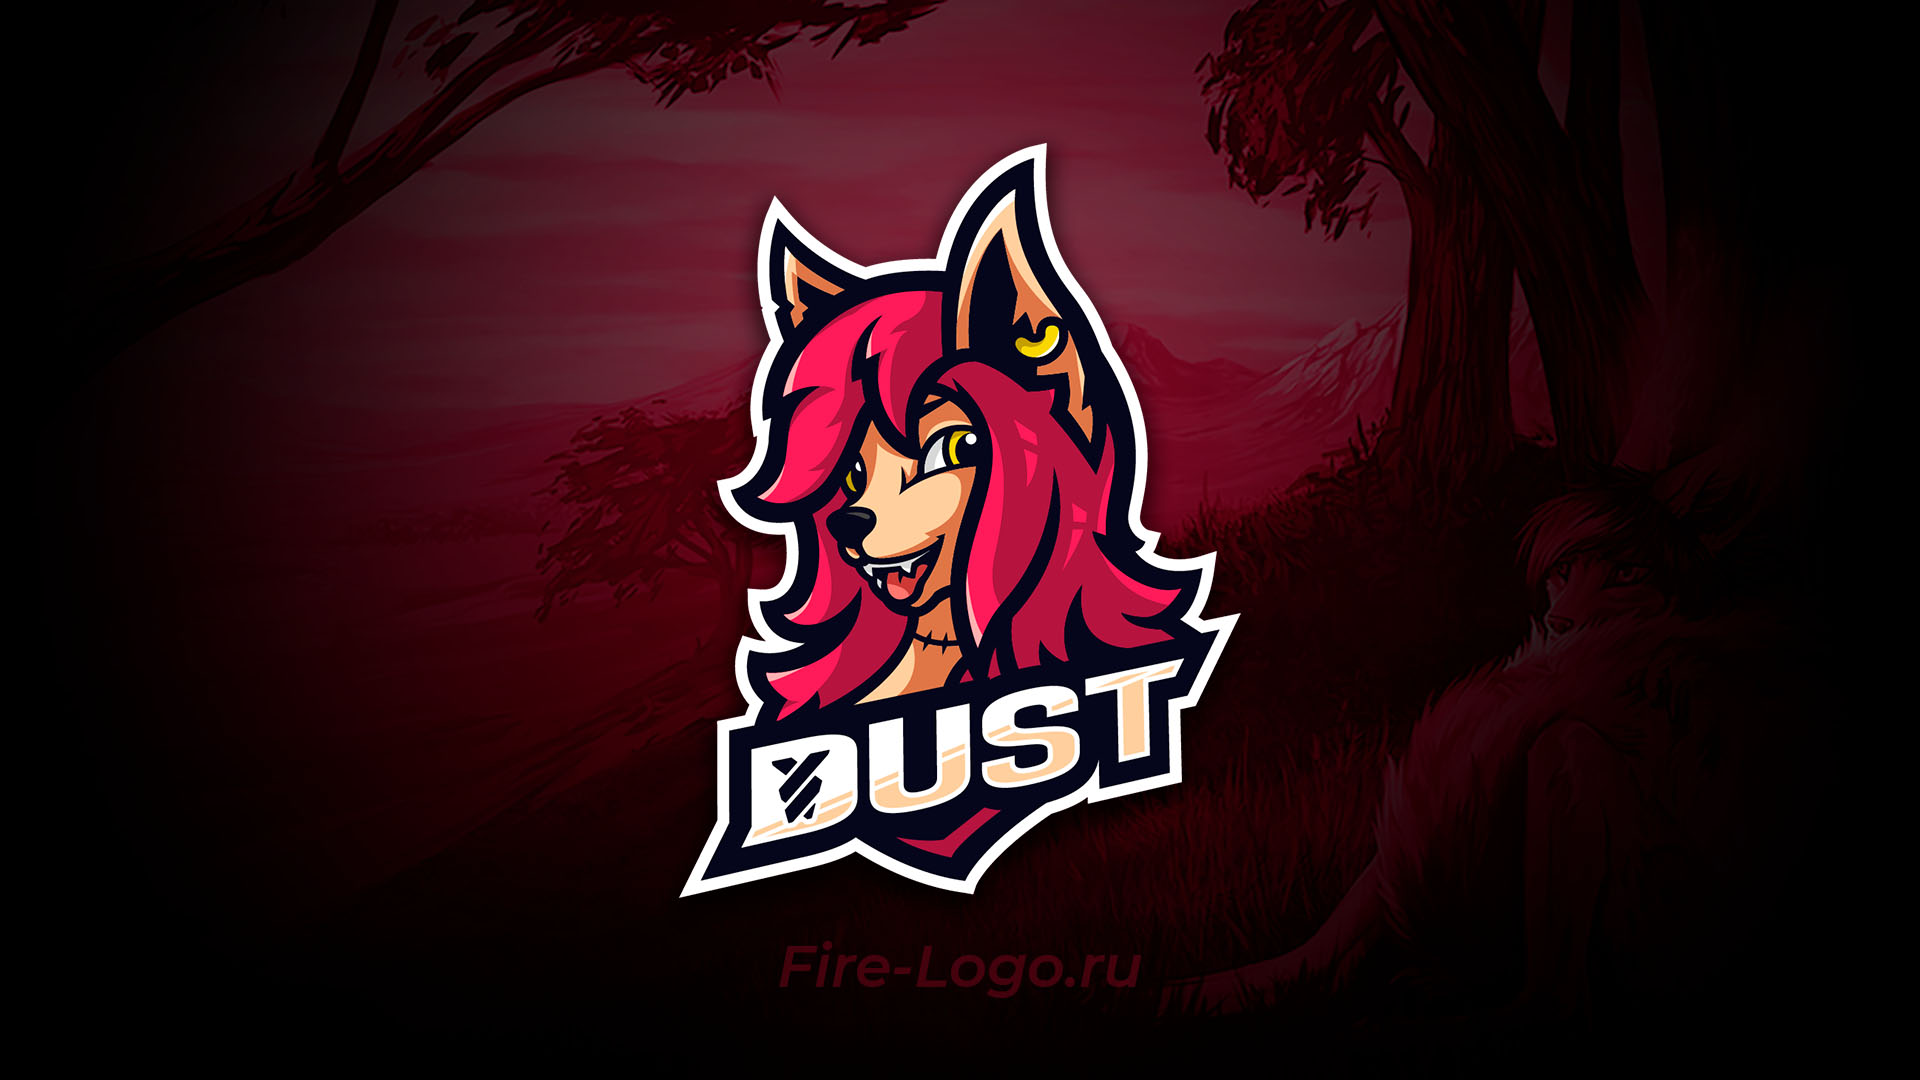 Логотип с фурри маскотом Dust